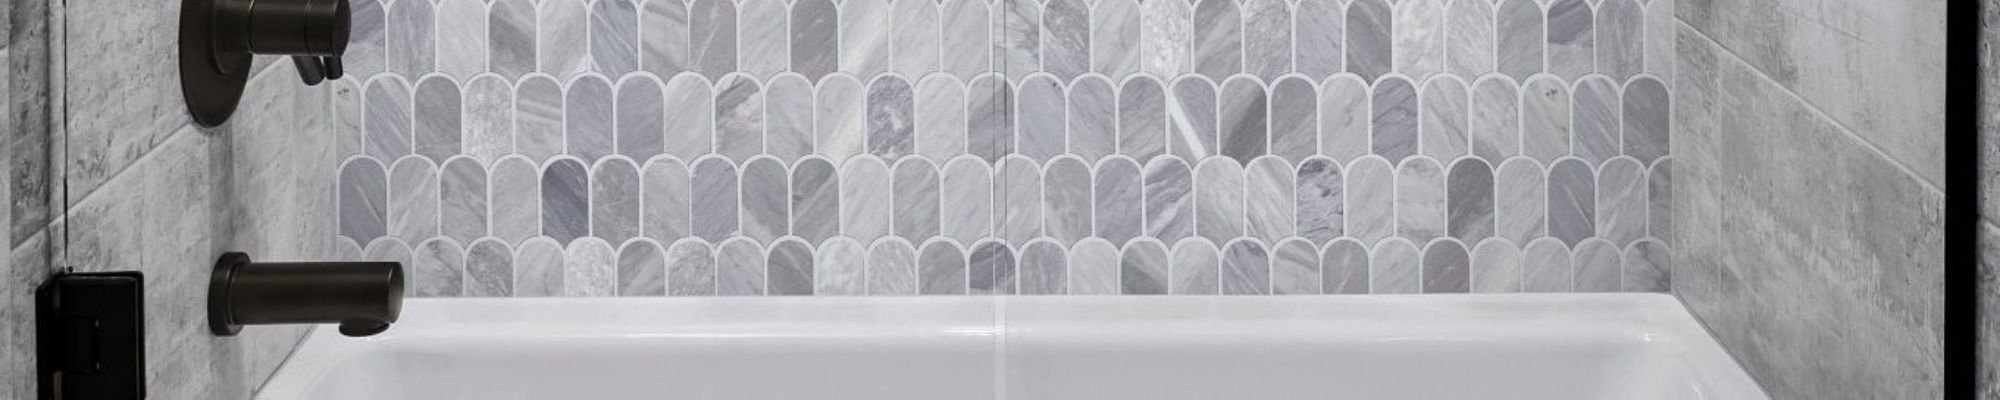 Tile on bathroom - Taylorville Home Source